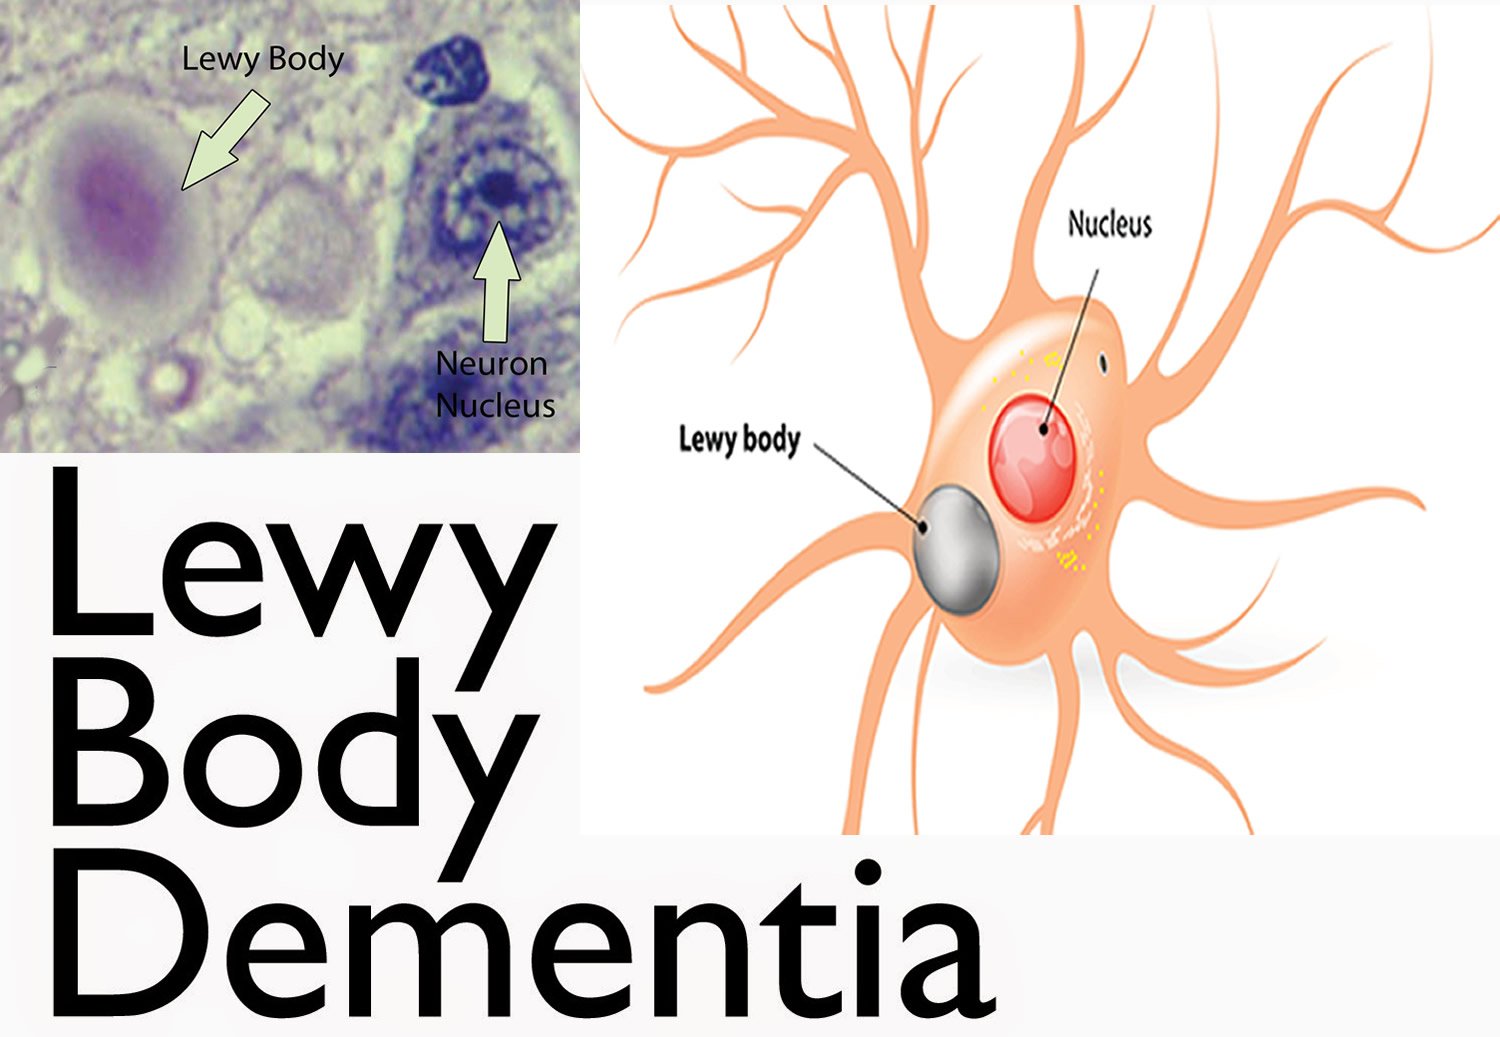 What is Lewy Body Dementia